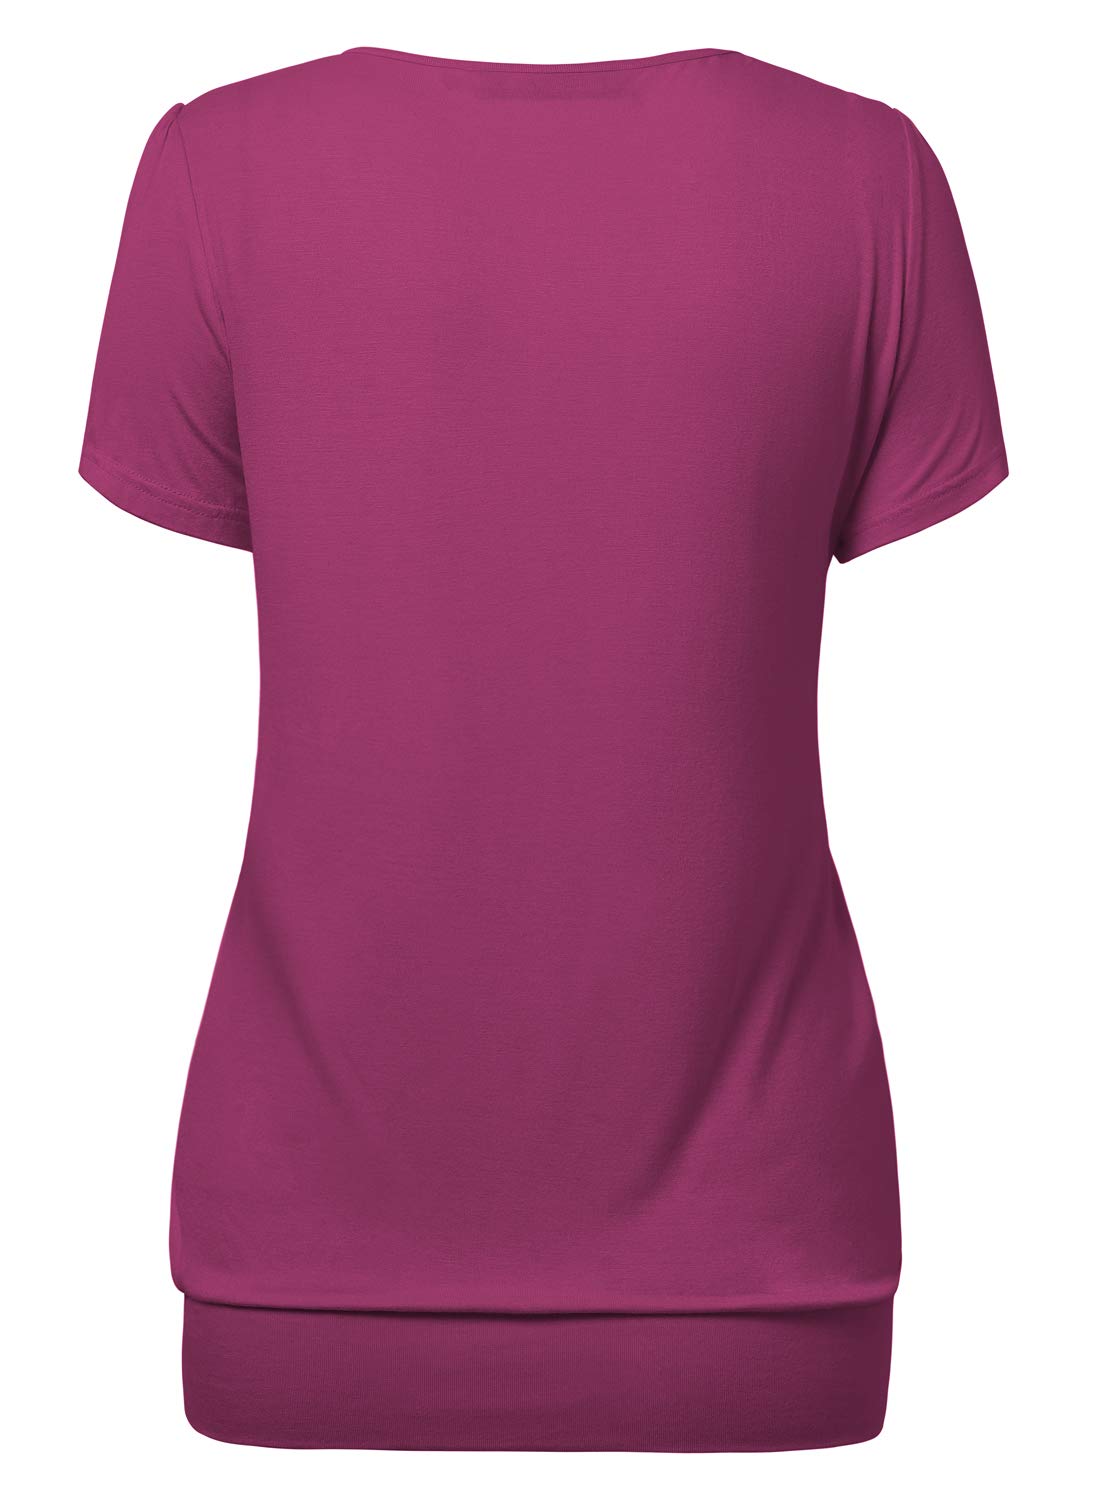 DJT Scoop Neck Black/Navy/Teal/Grey/Purple Short Sleeve Women's Pleated Front Blouse Tunic Tops